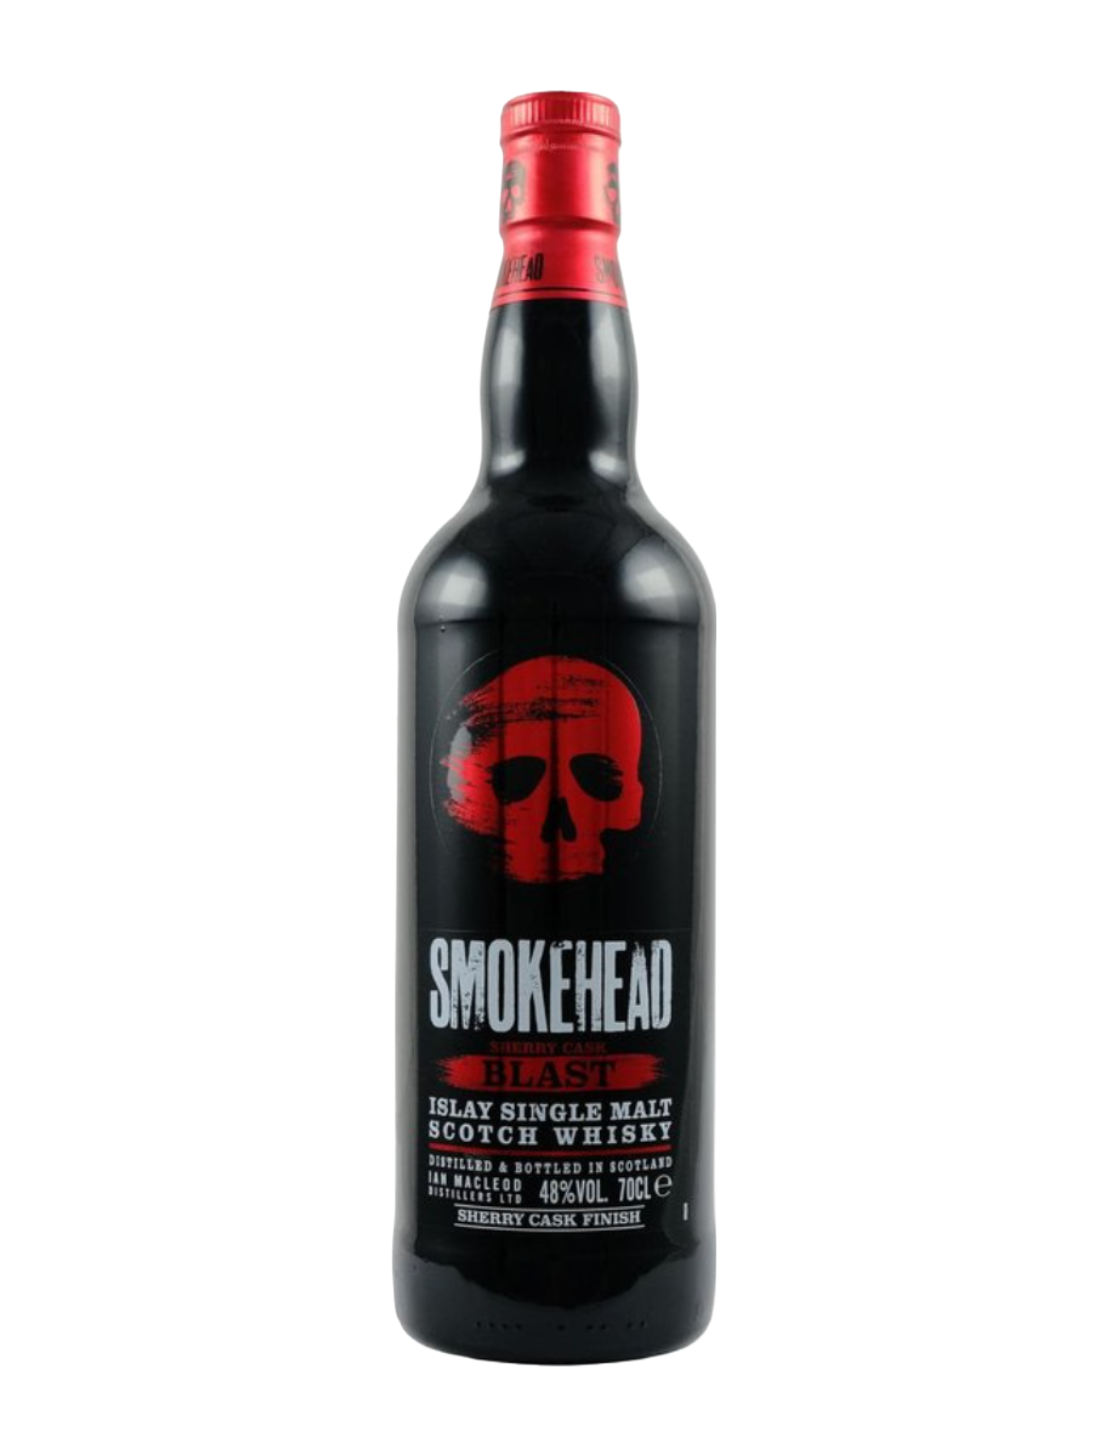 An elegant bottle of Smokehead Sherry Cask Blast Islay Single Malt Whisky in front of a plain white background